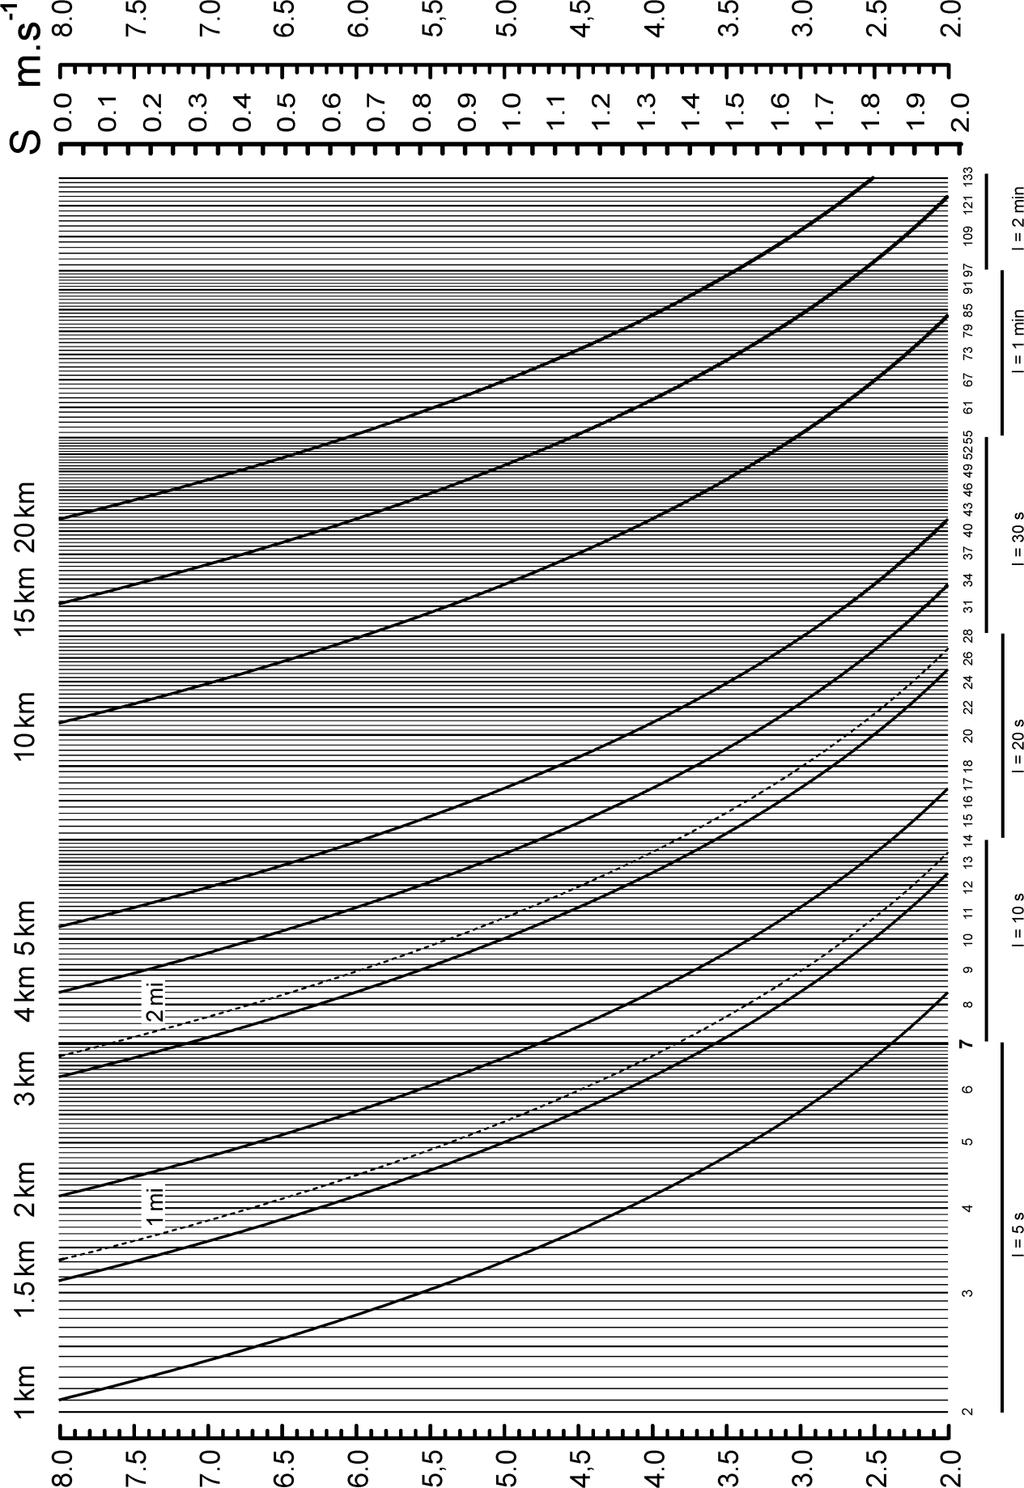 Fig. 4: nomogram of running performances (Péronnet-Thibault model) for distances rangeing from 1000 m to 20000 m.